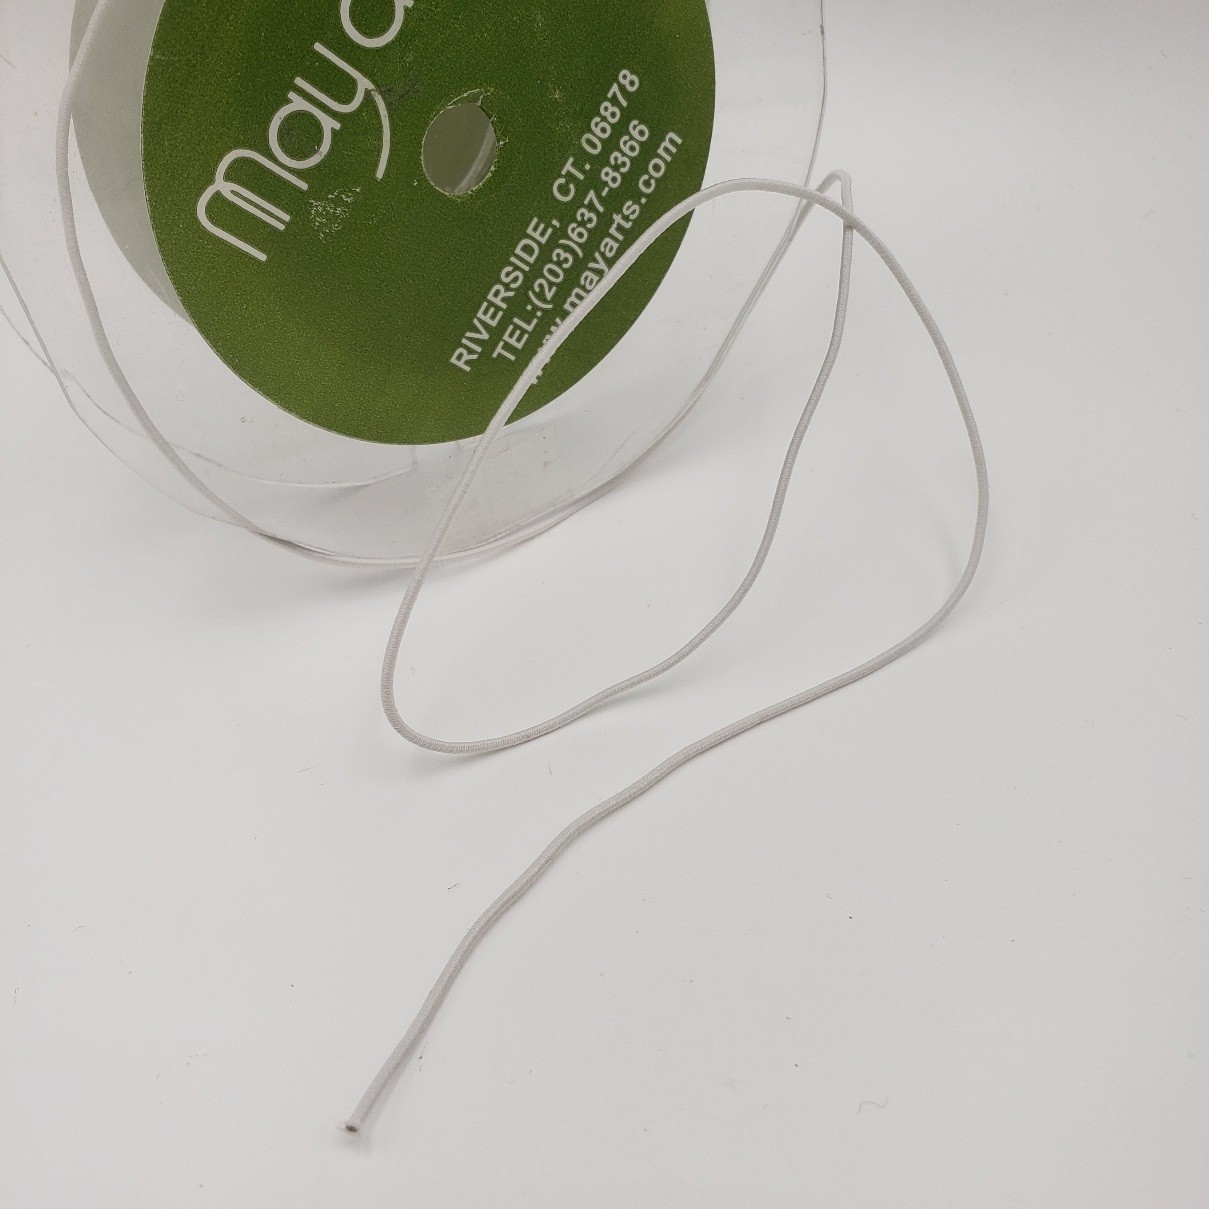 1 mm white elastic cord